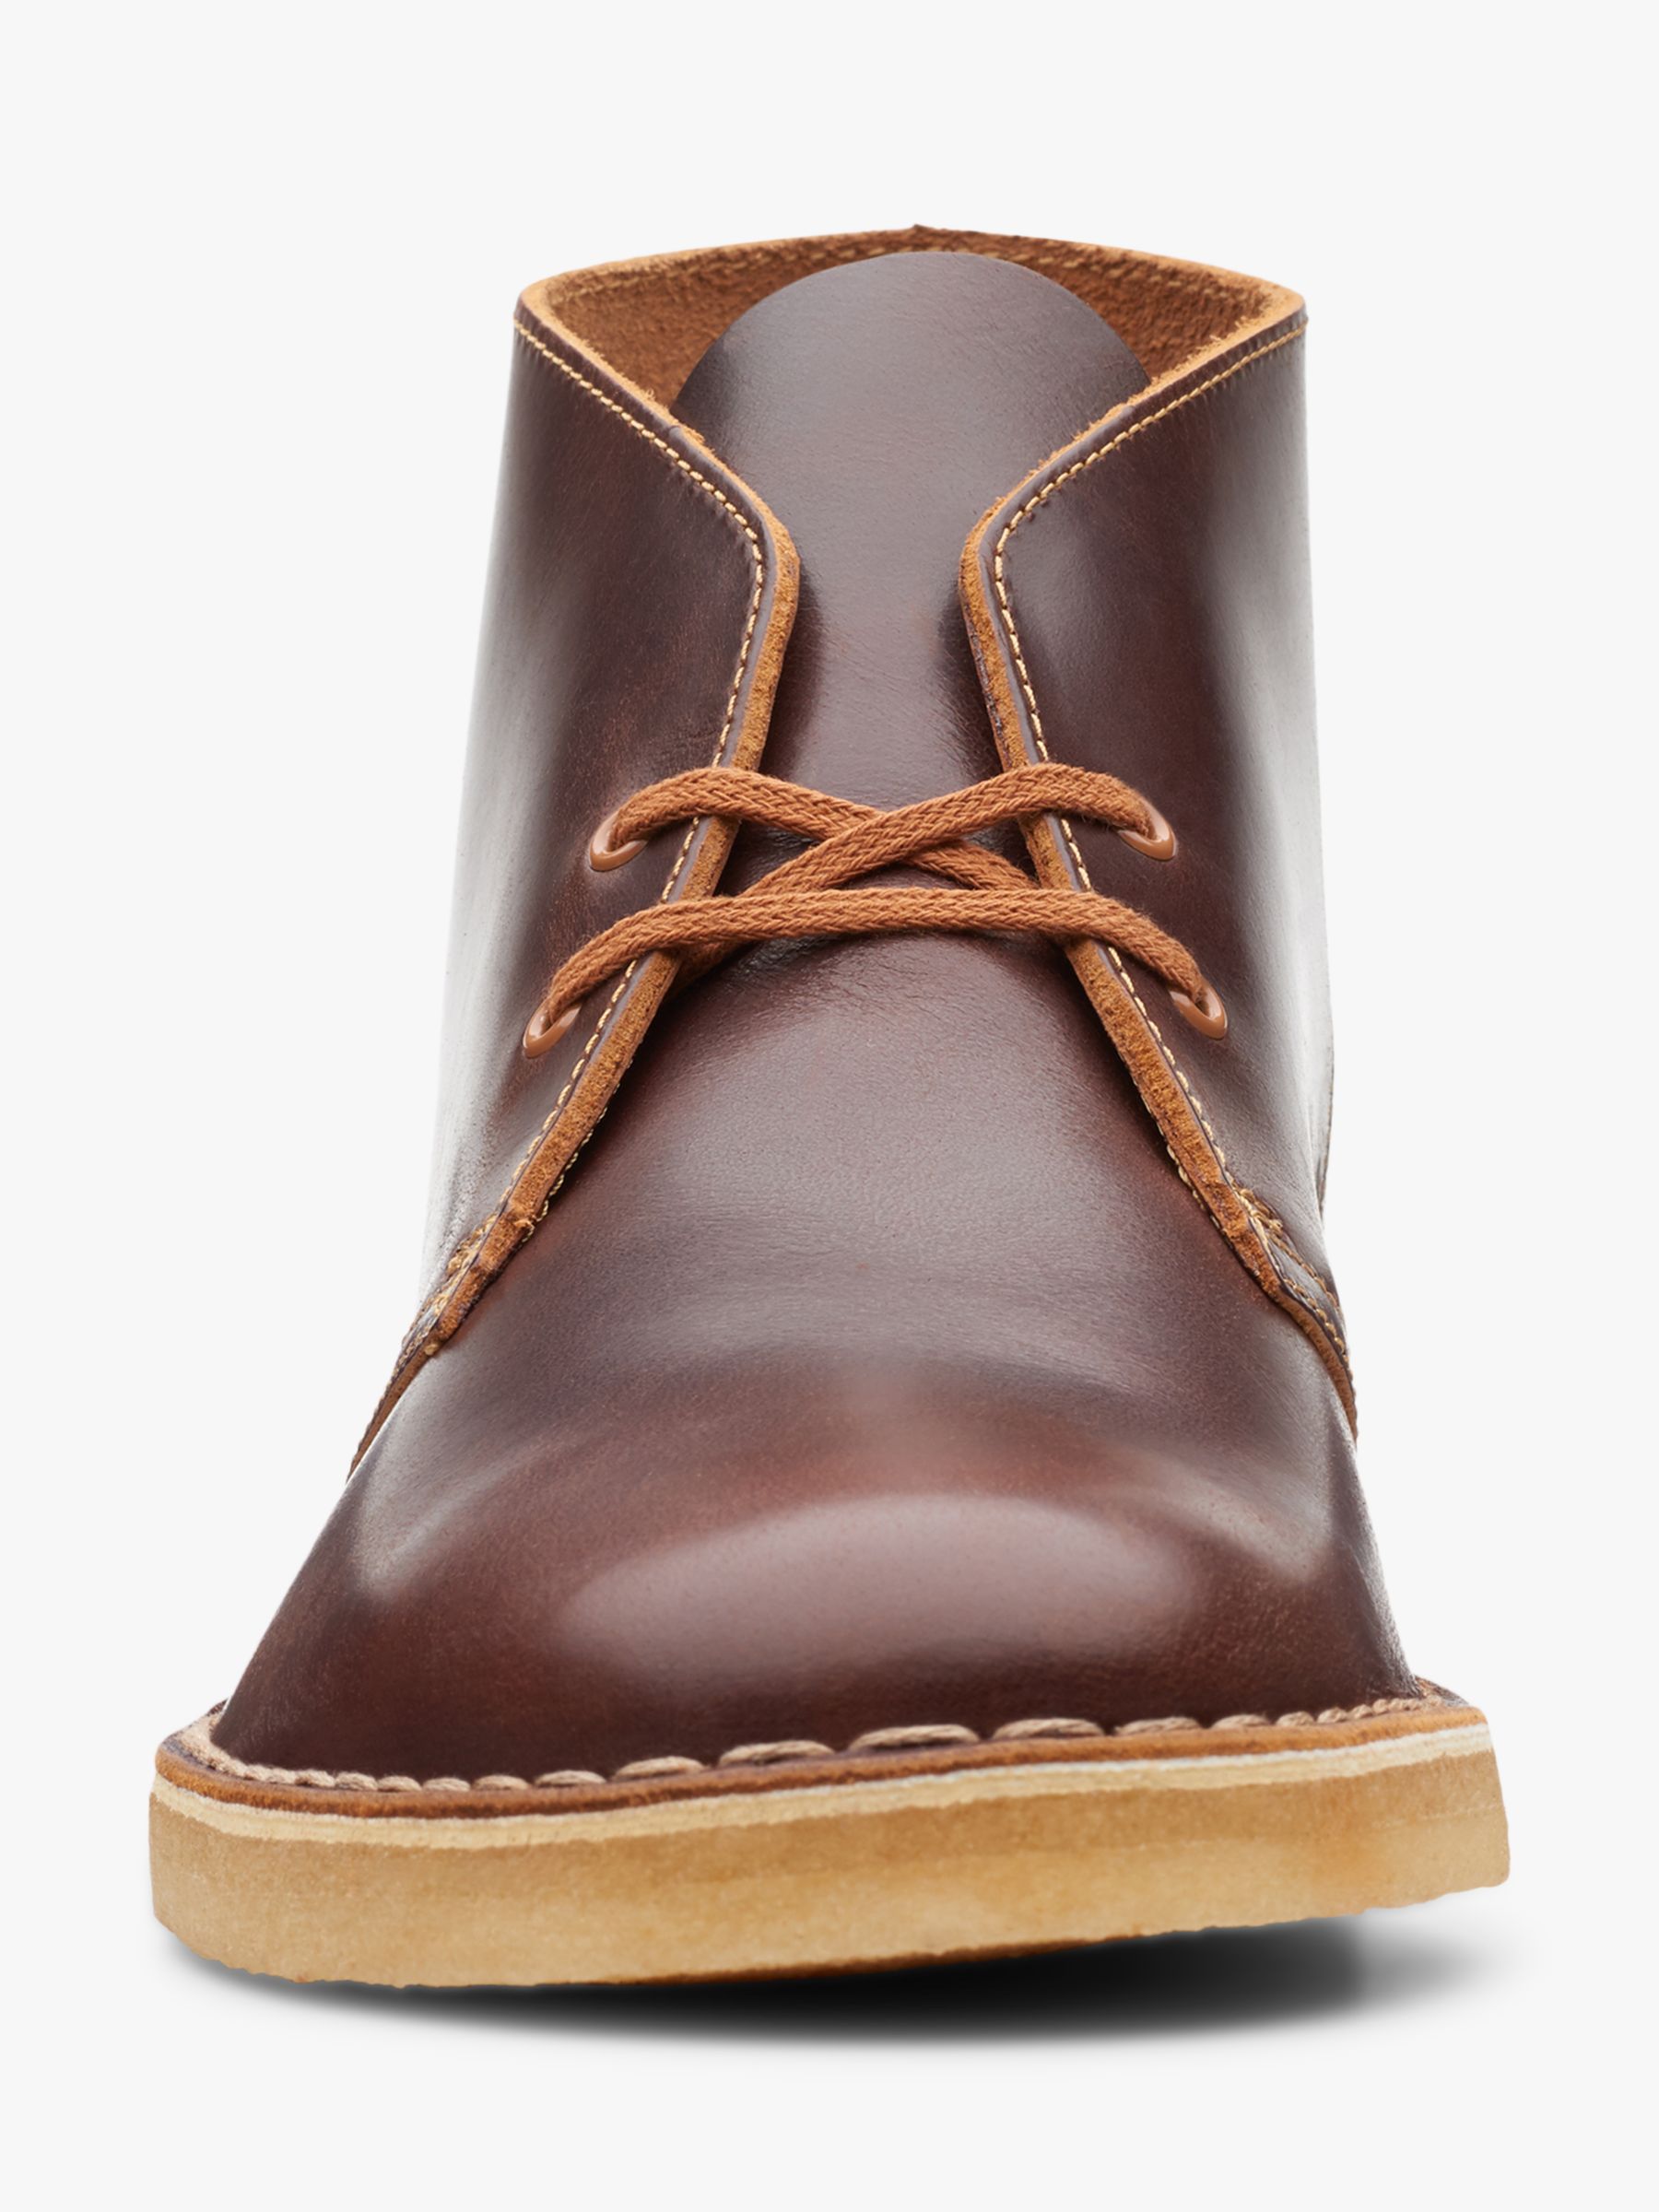 clarks originals tan leather desert boots